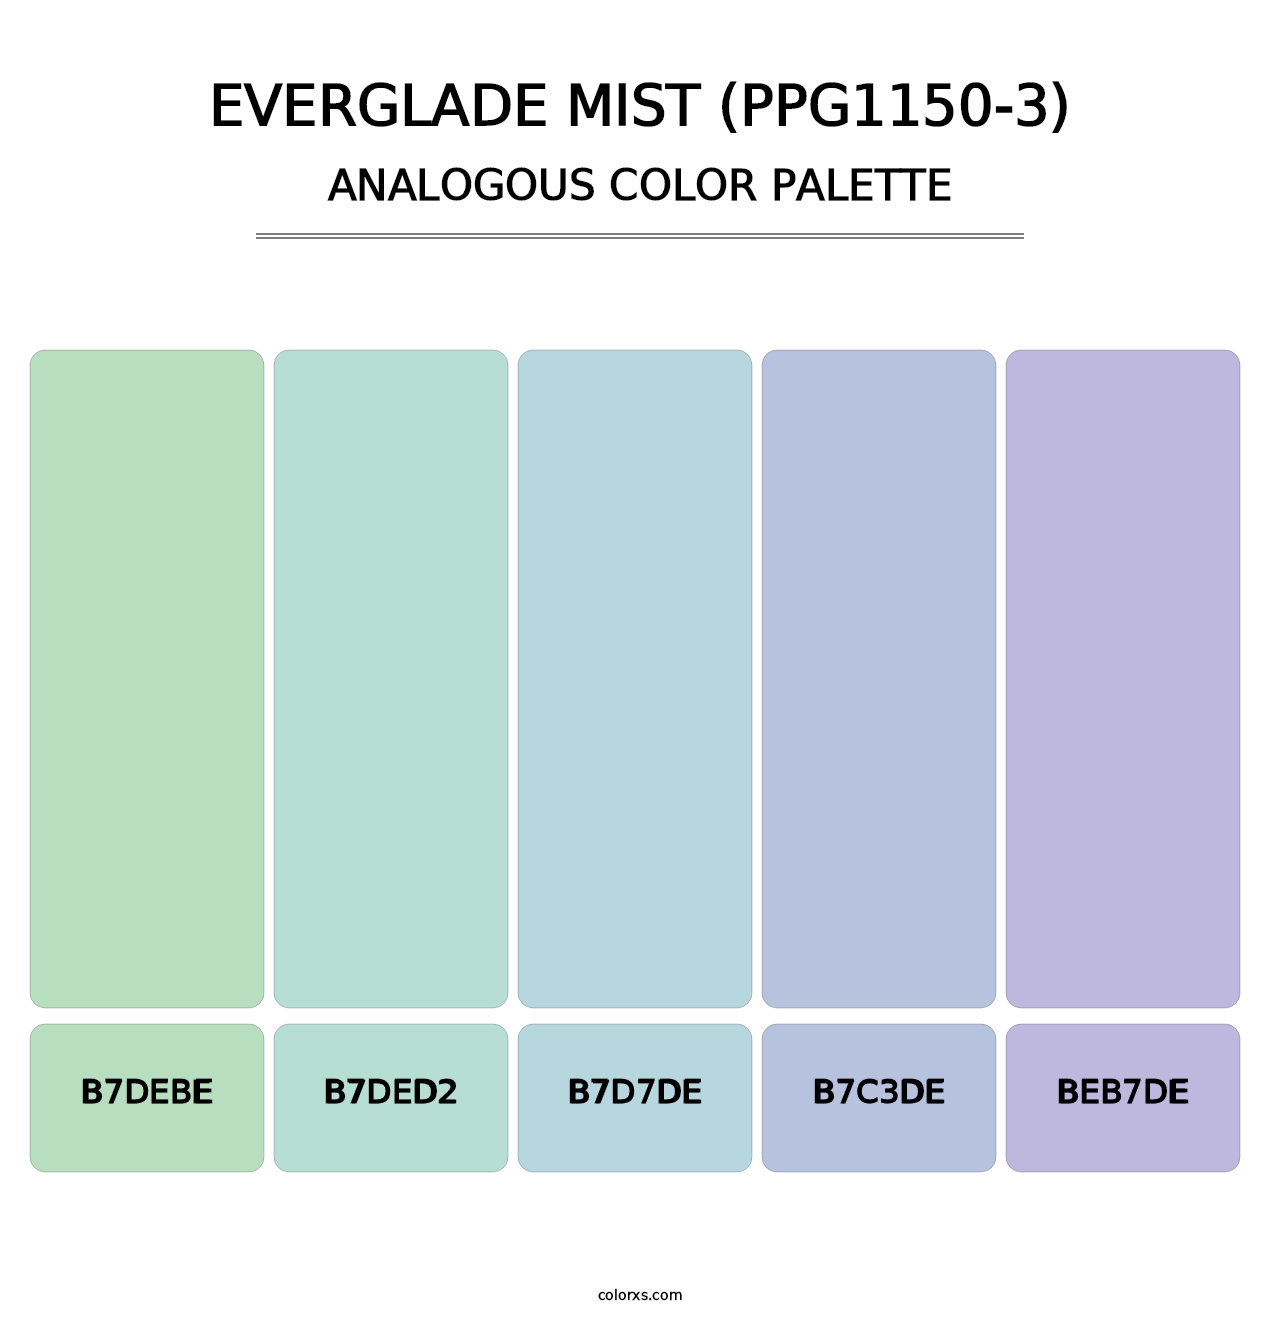 Everglade Mist (PPG1150-3) - Analogous Color Palette